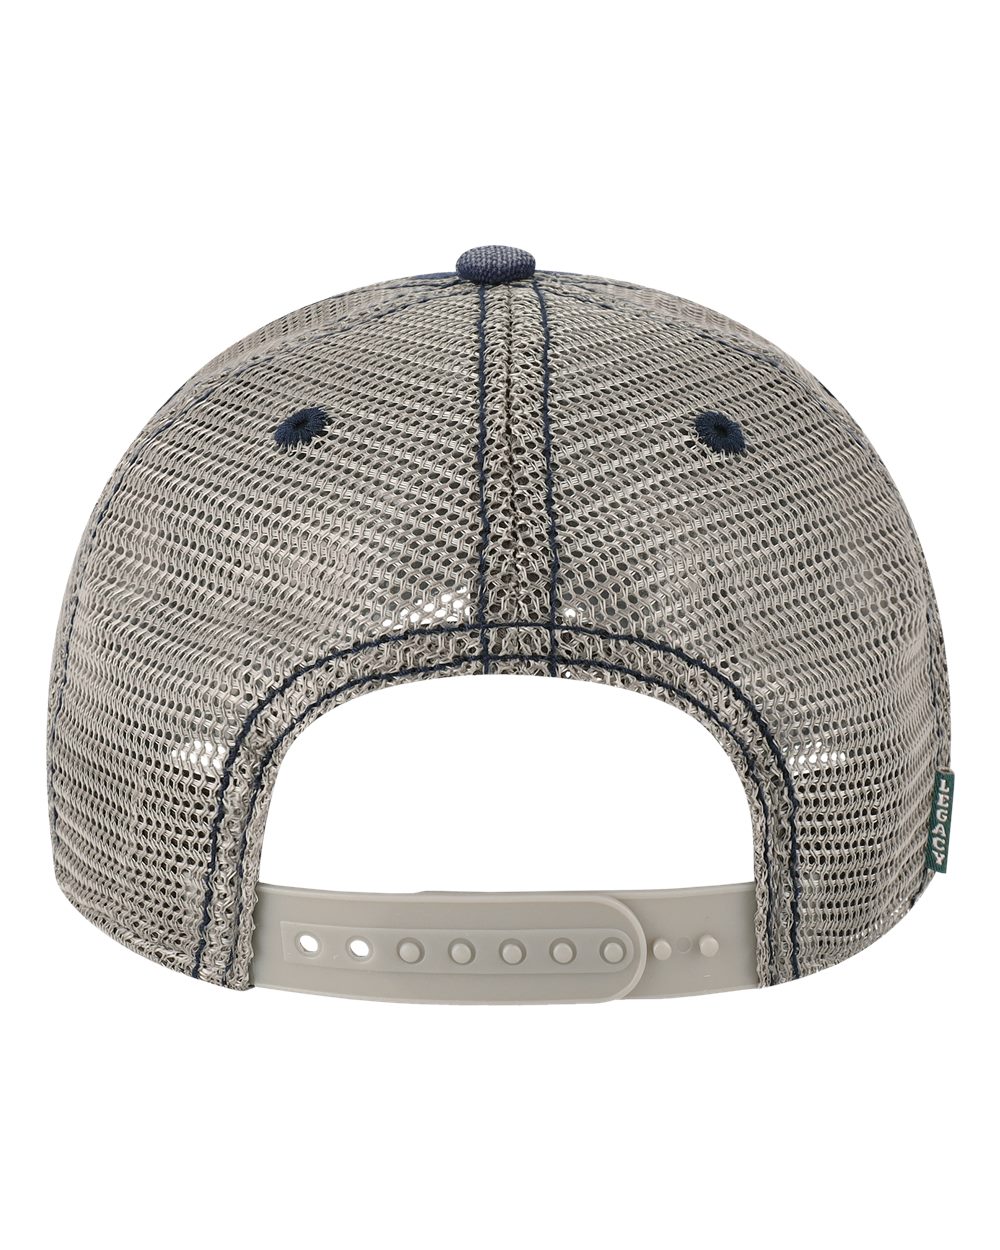 LEGACY Mens Dashboard Trucker Cap Hat DTA Pre-curved visor | eBay